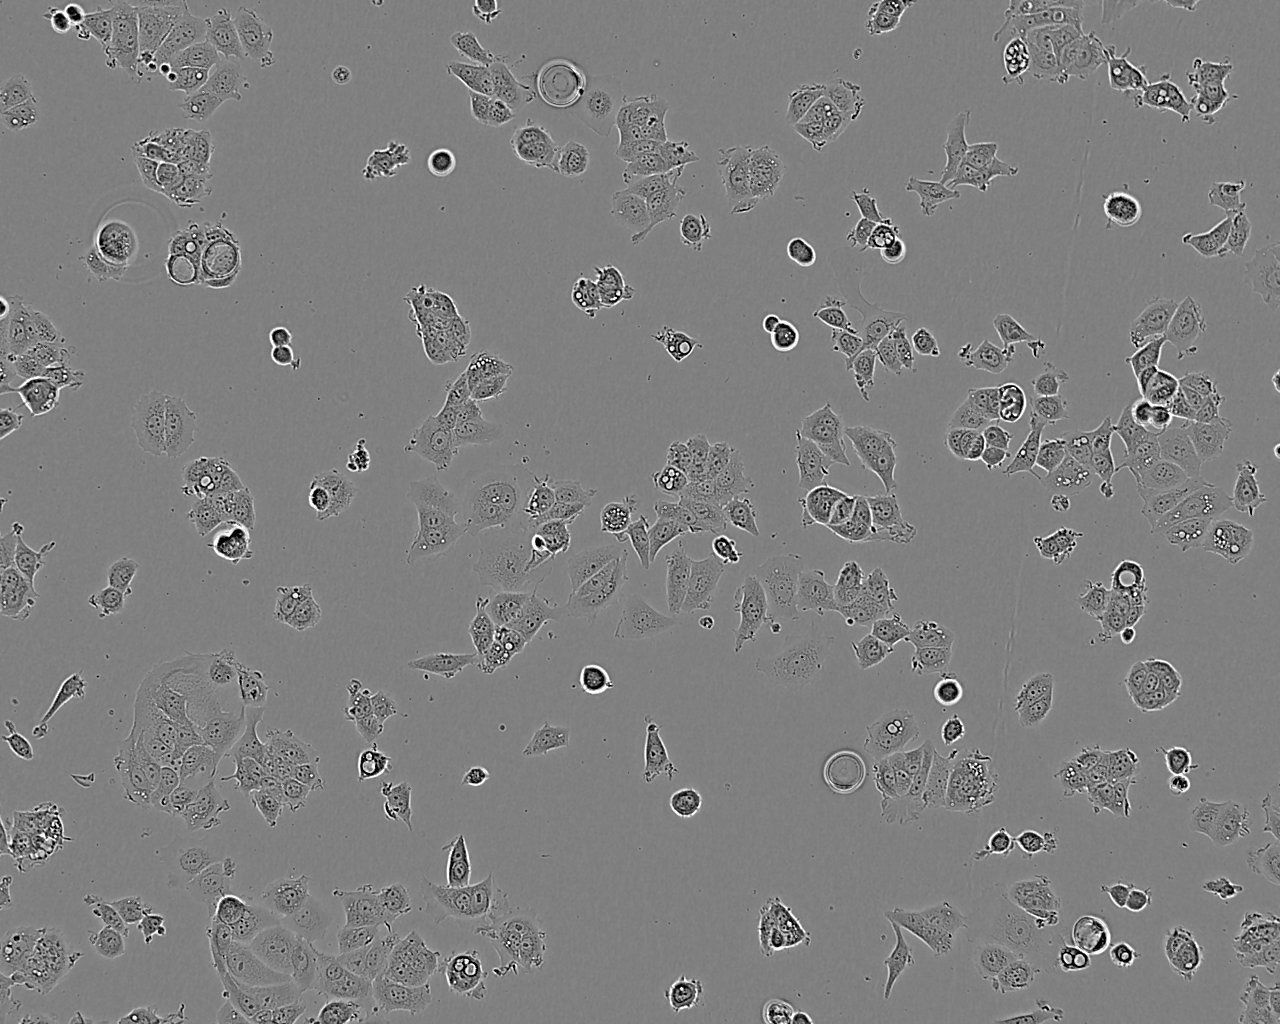 Ishikawa Cells|人子宫内膜癌需消化细胞系